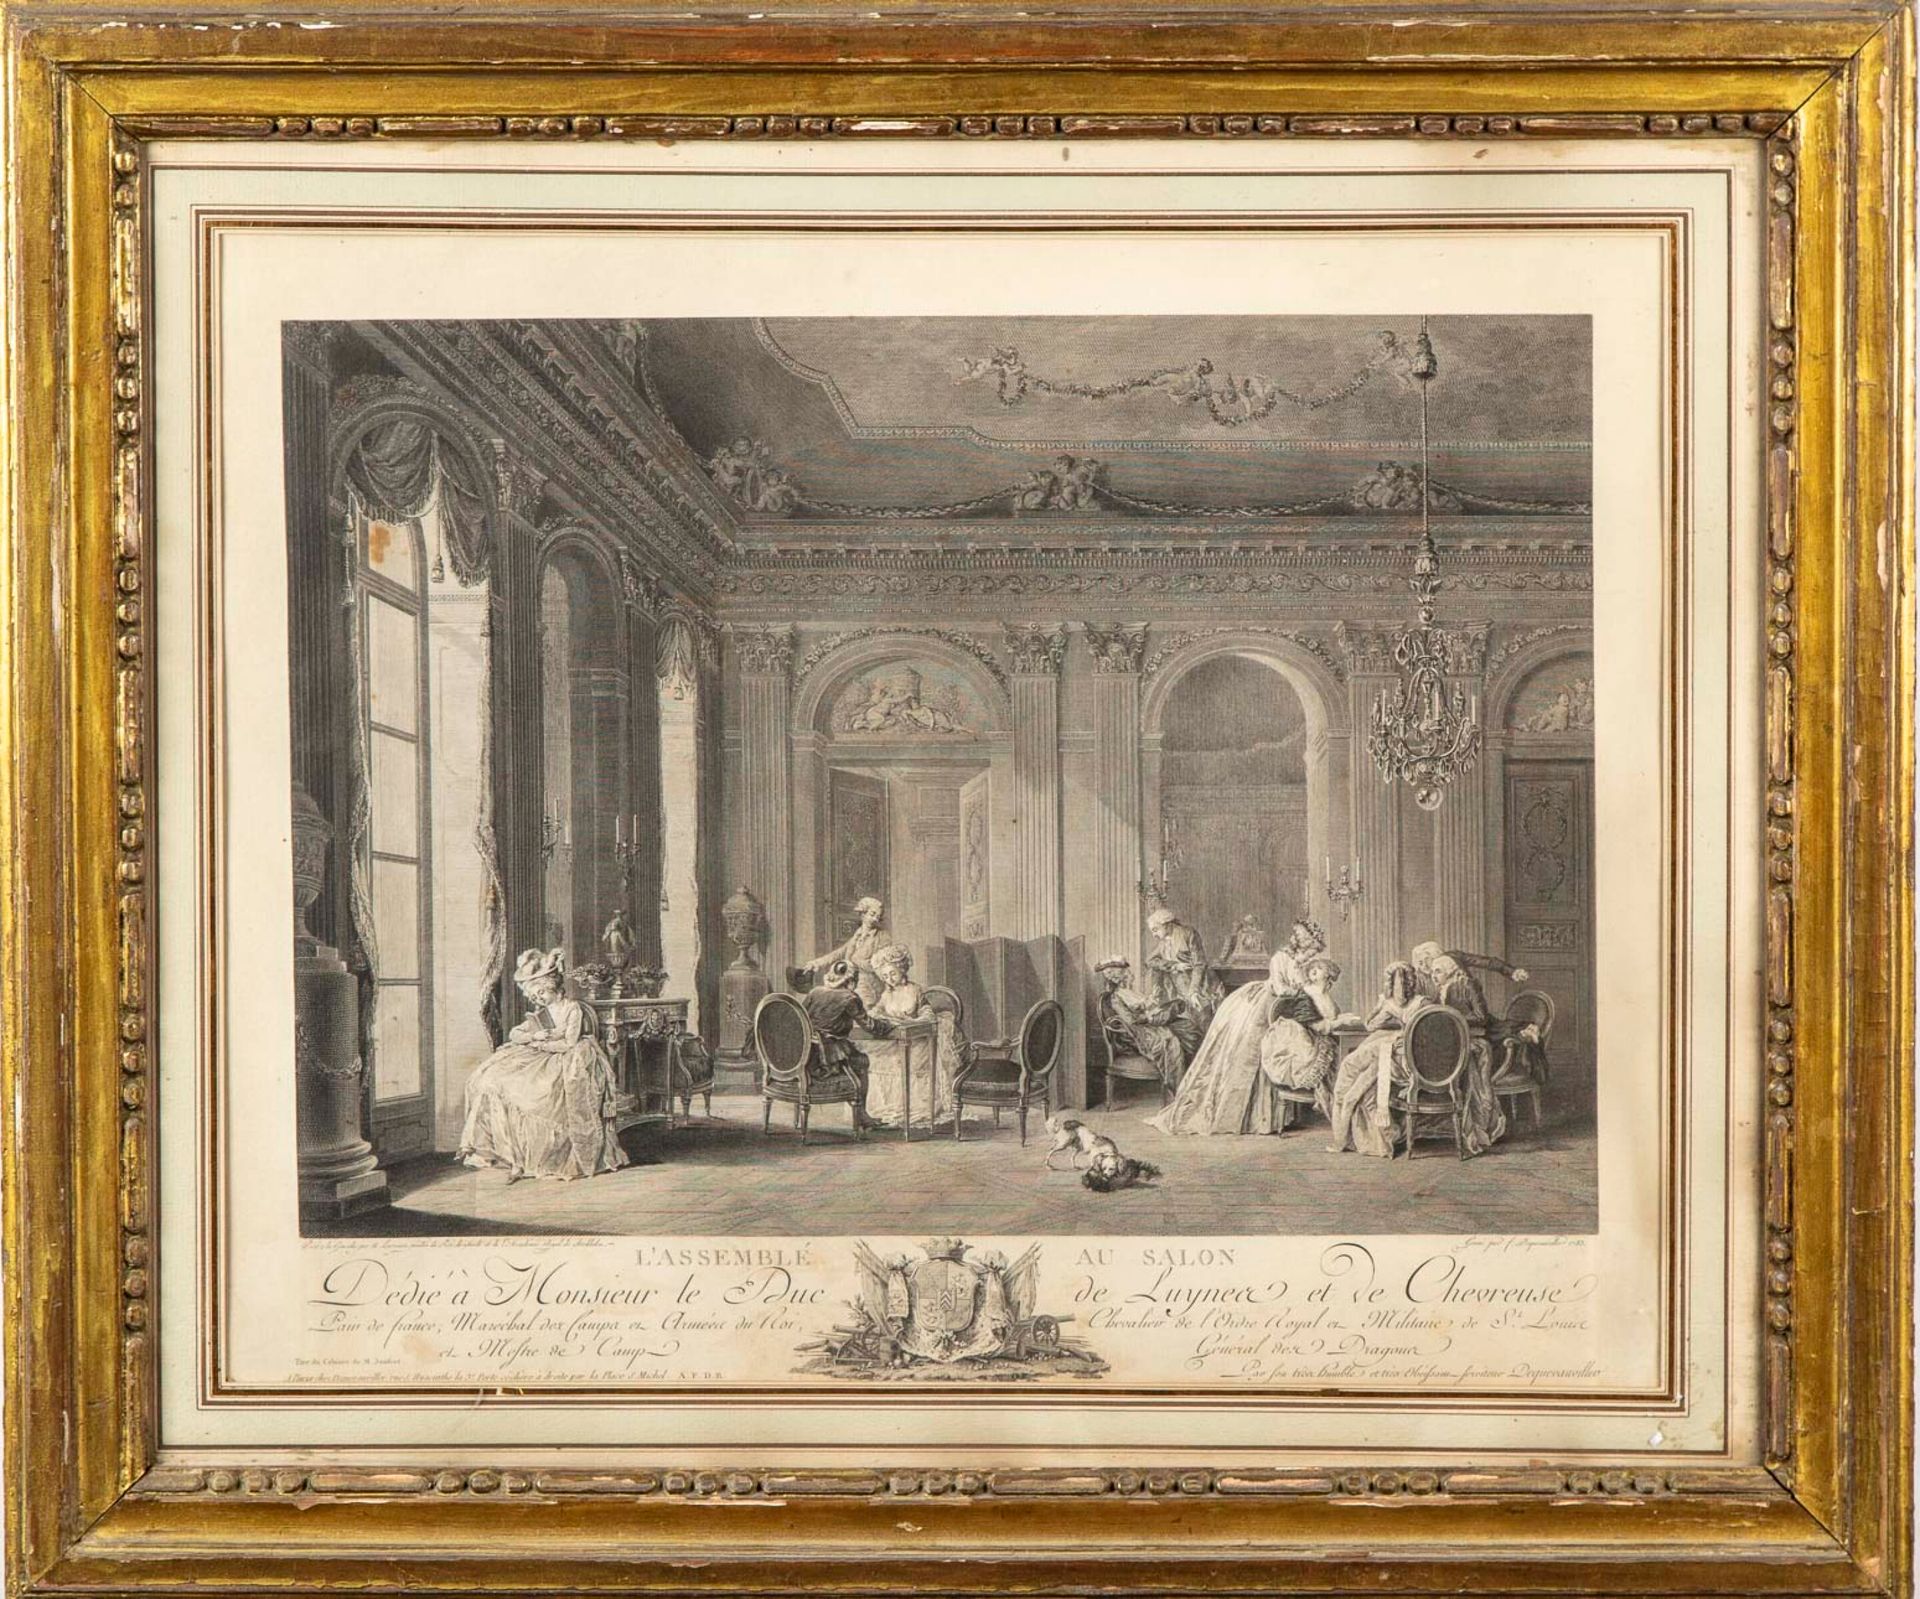 LAVREINCE Según Lavreince, grabado por François Dequevauviller (1745-1817)

La A&hellip;